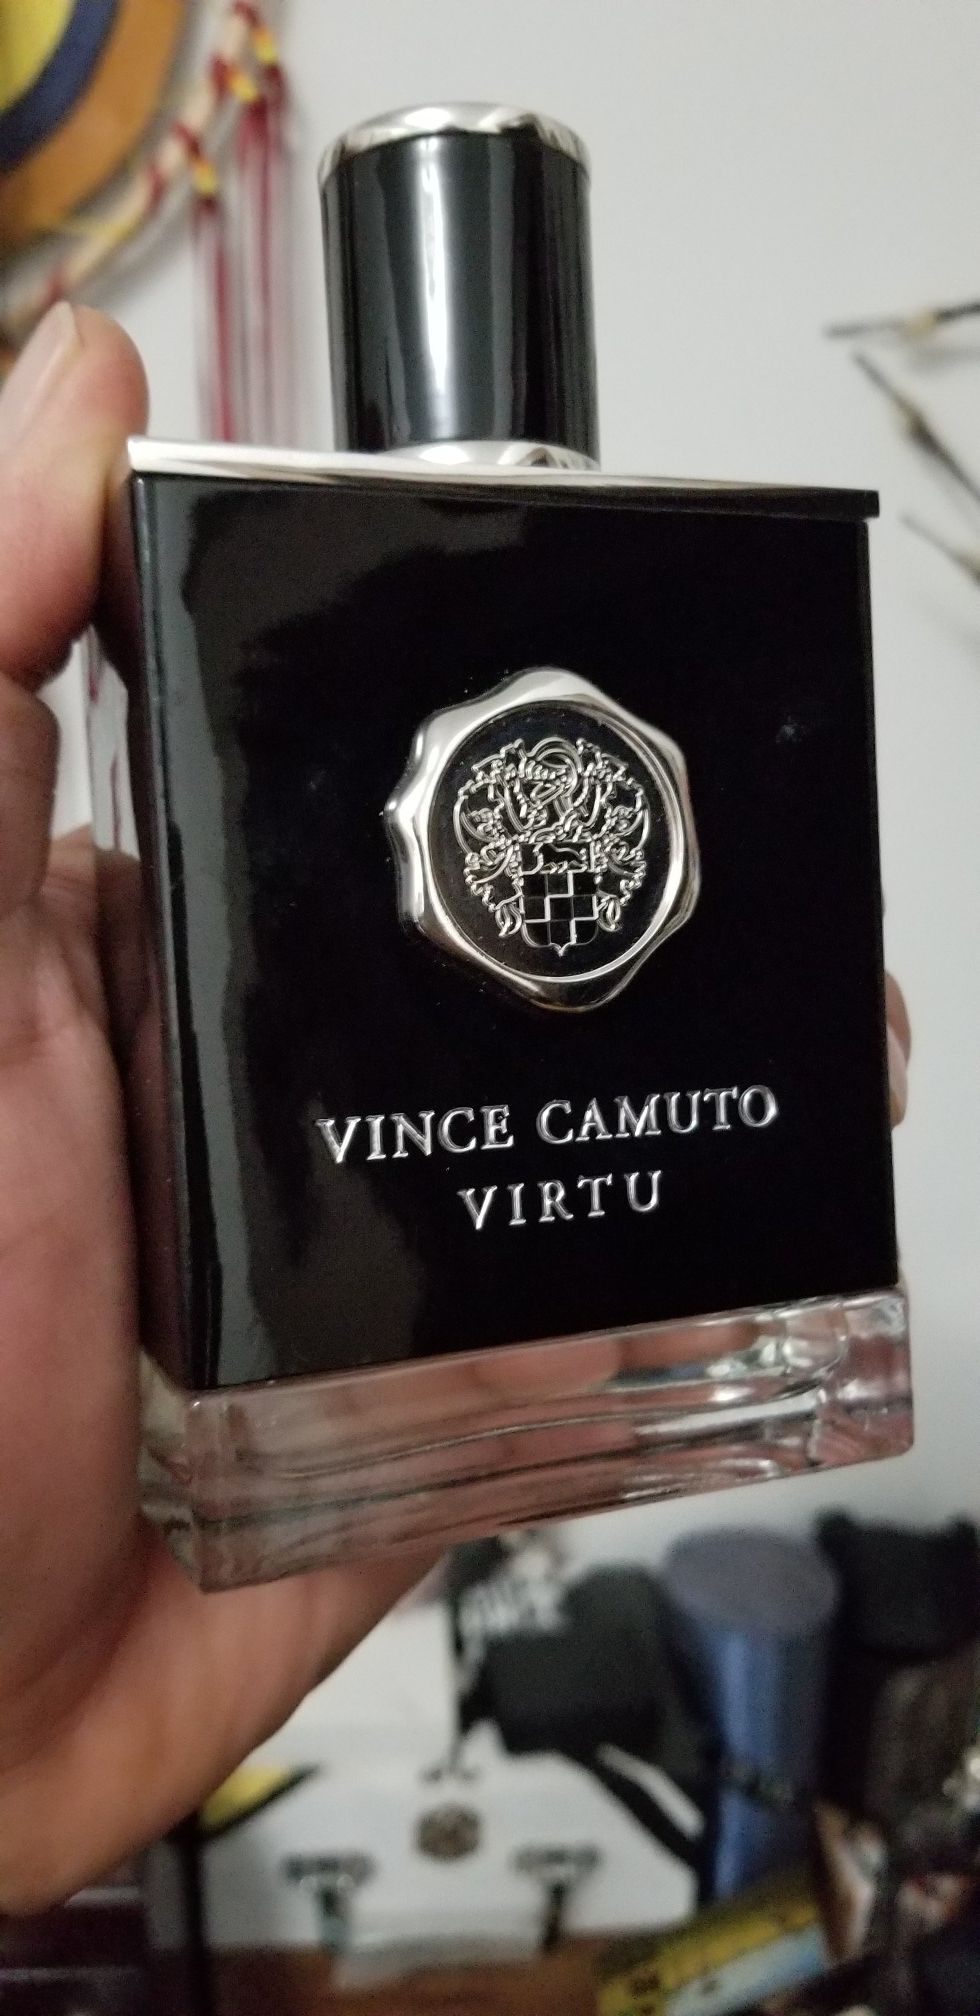 Vince Camuto Virtu Mens Cologne 3.4 oz EDT for Sale in Albuquerque